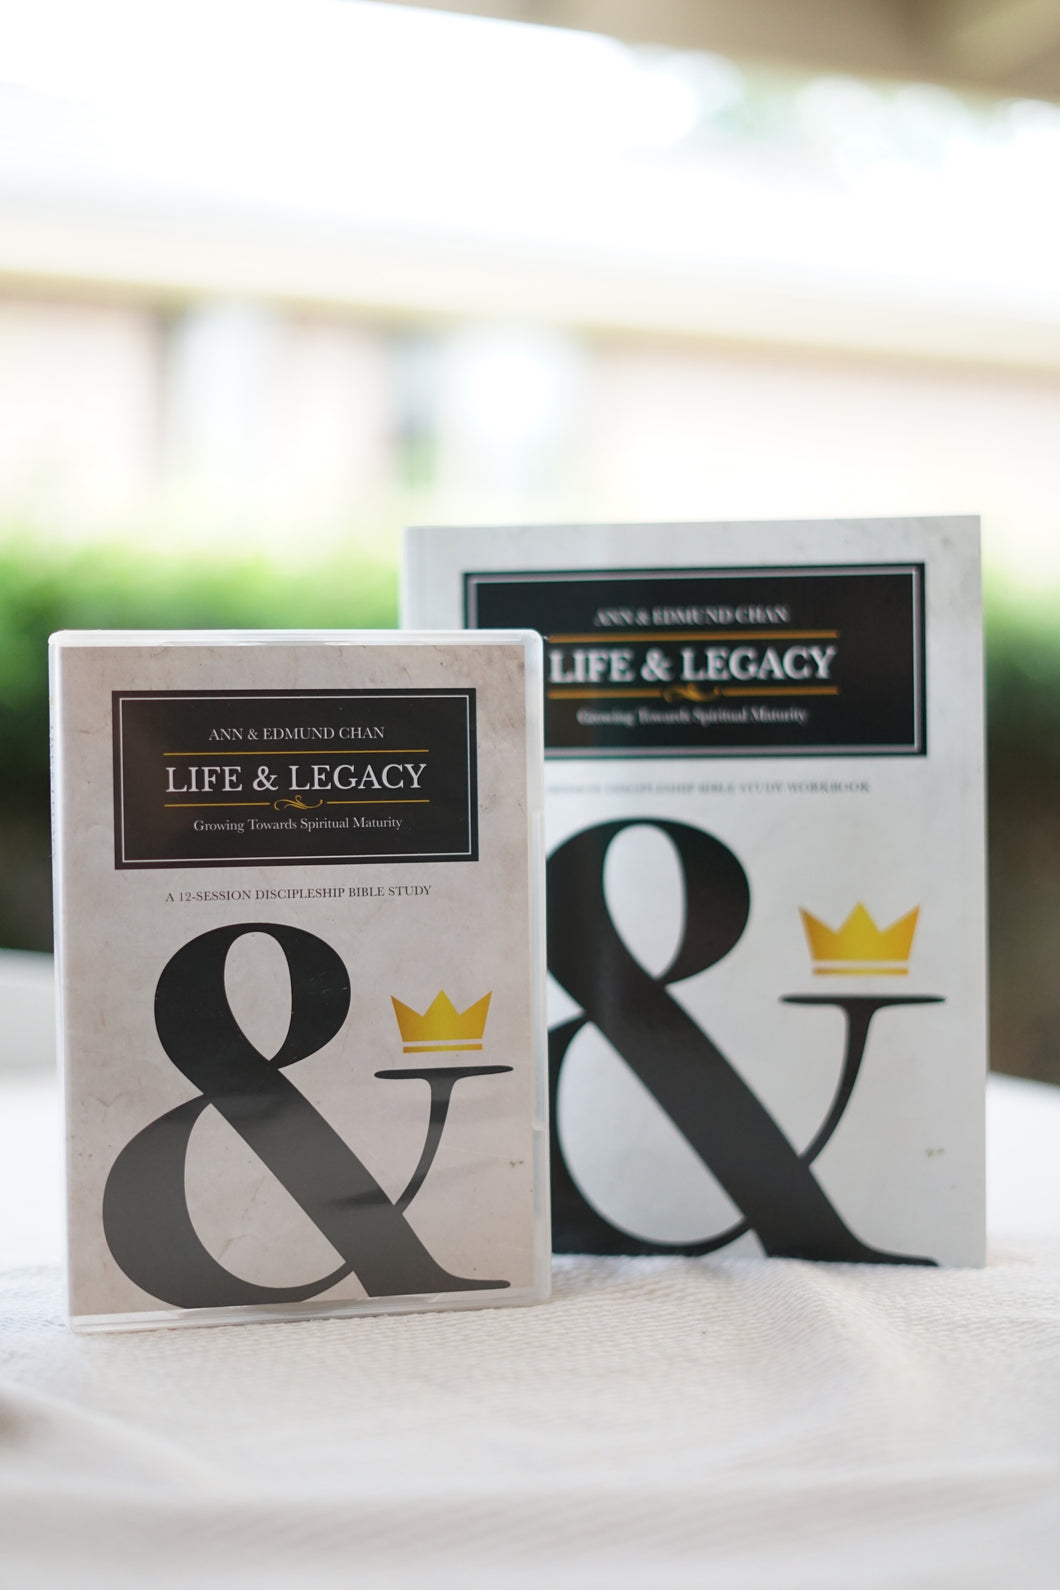 Life & Legacy DVD